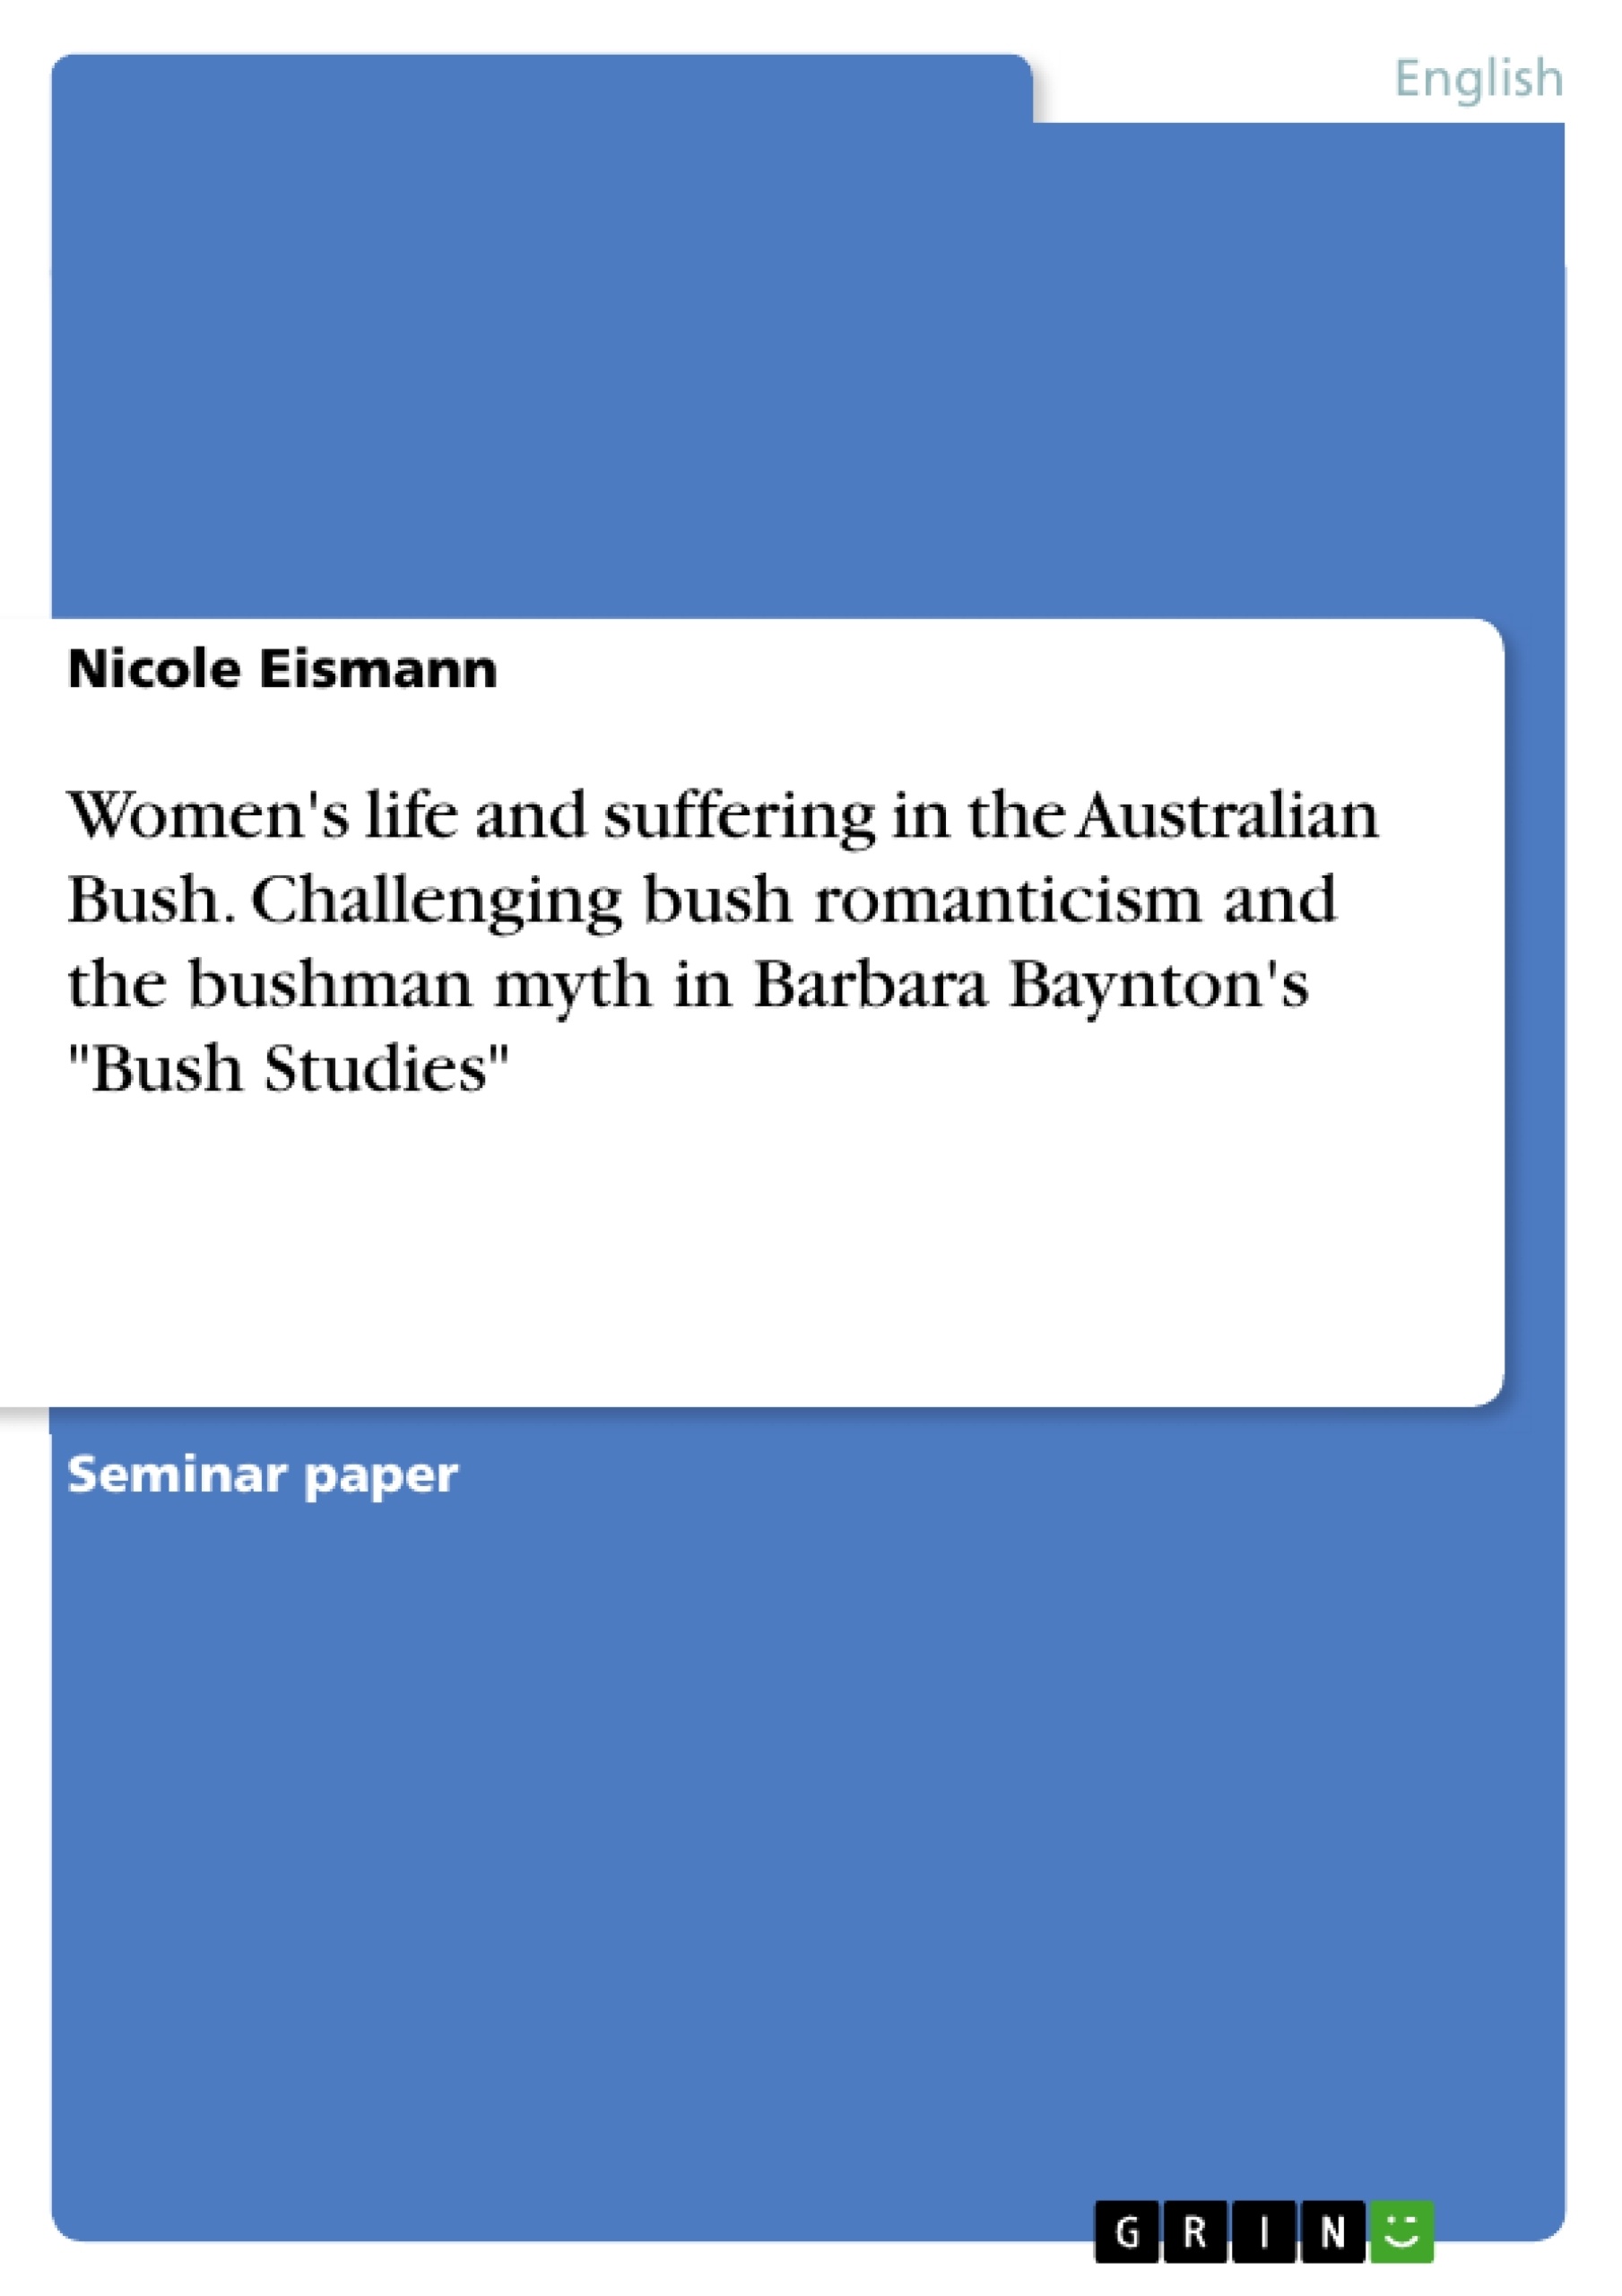 Title: Women's life and suffering in the Australian Bush. Challenging bush romanticism and the bushman myth in Barbara Baynton's "Bush Studies"